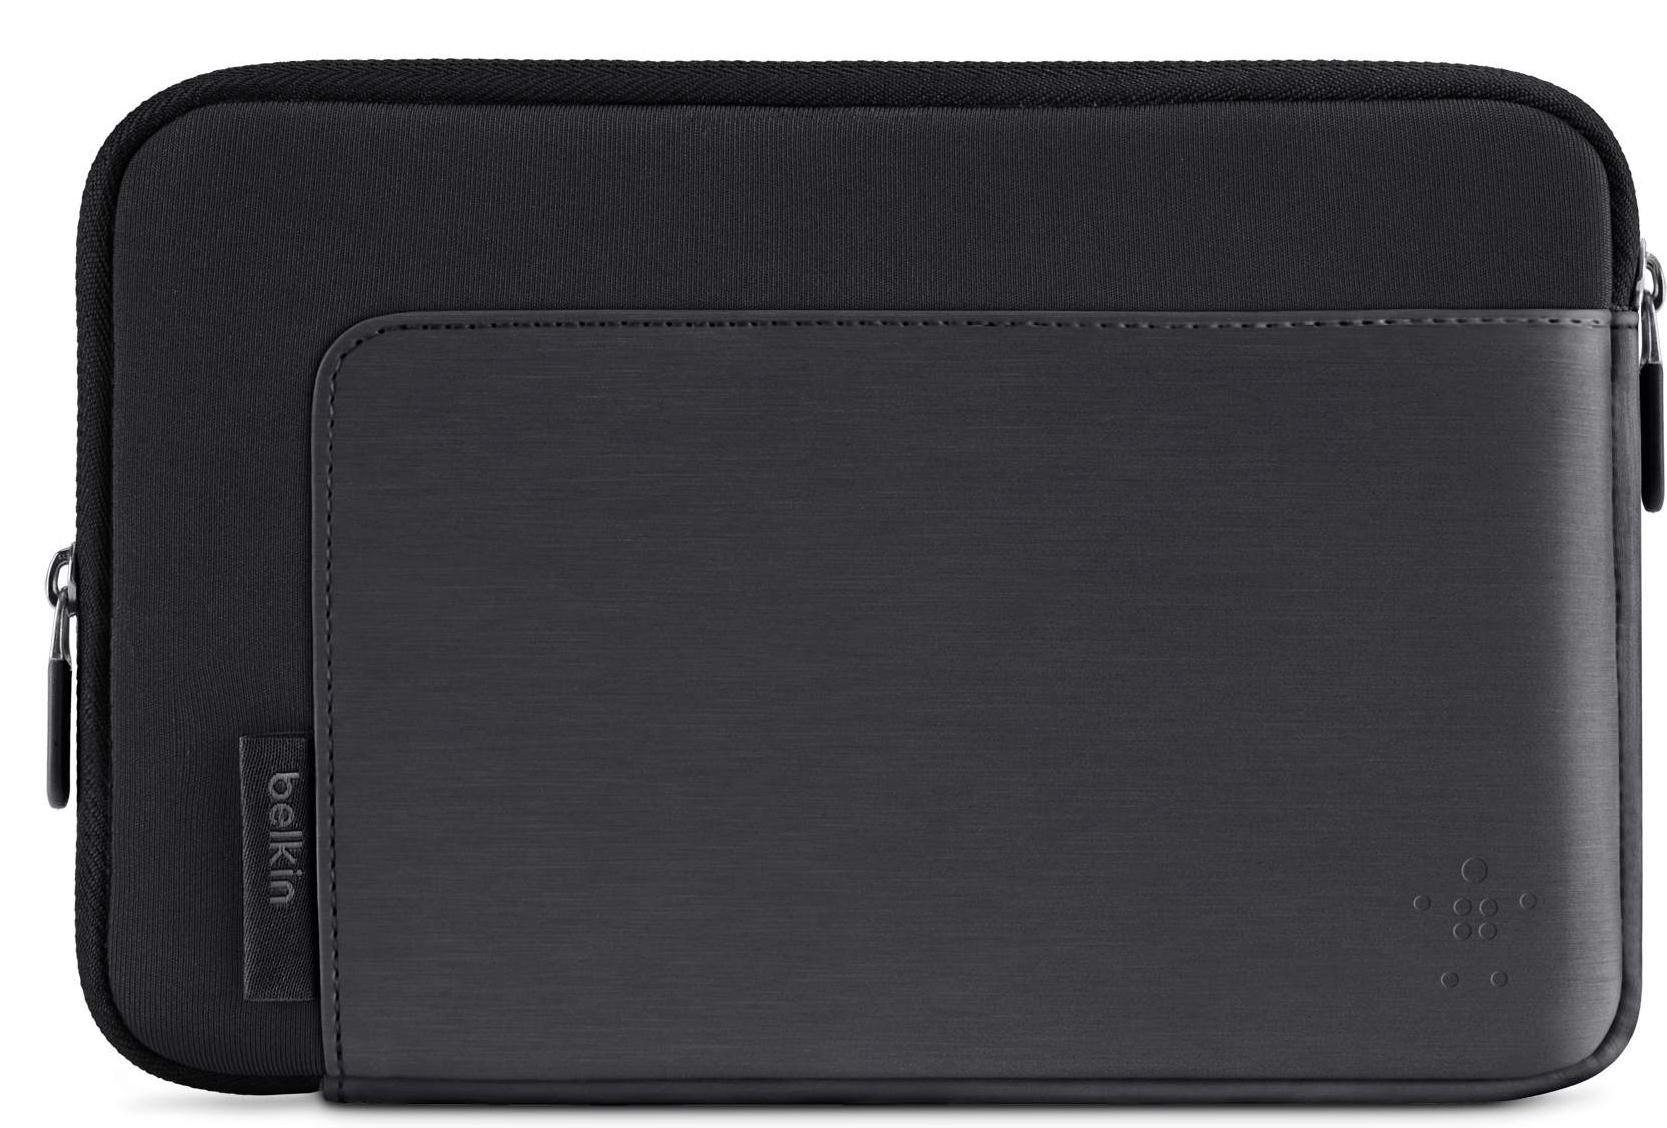 Belkin Neopren Portfolio Sleeve 2.0 (geeignet für Apple iPad Mini) schwarz